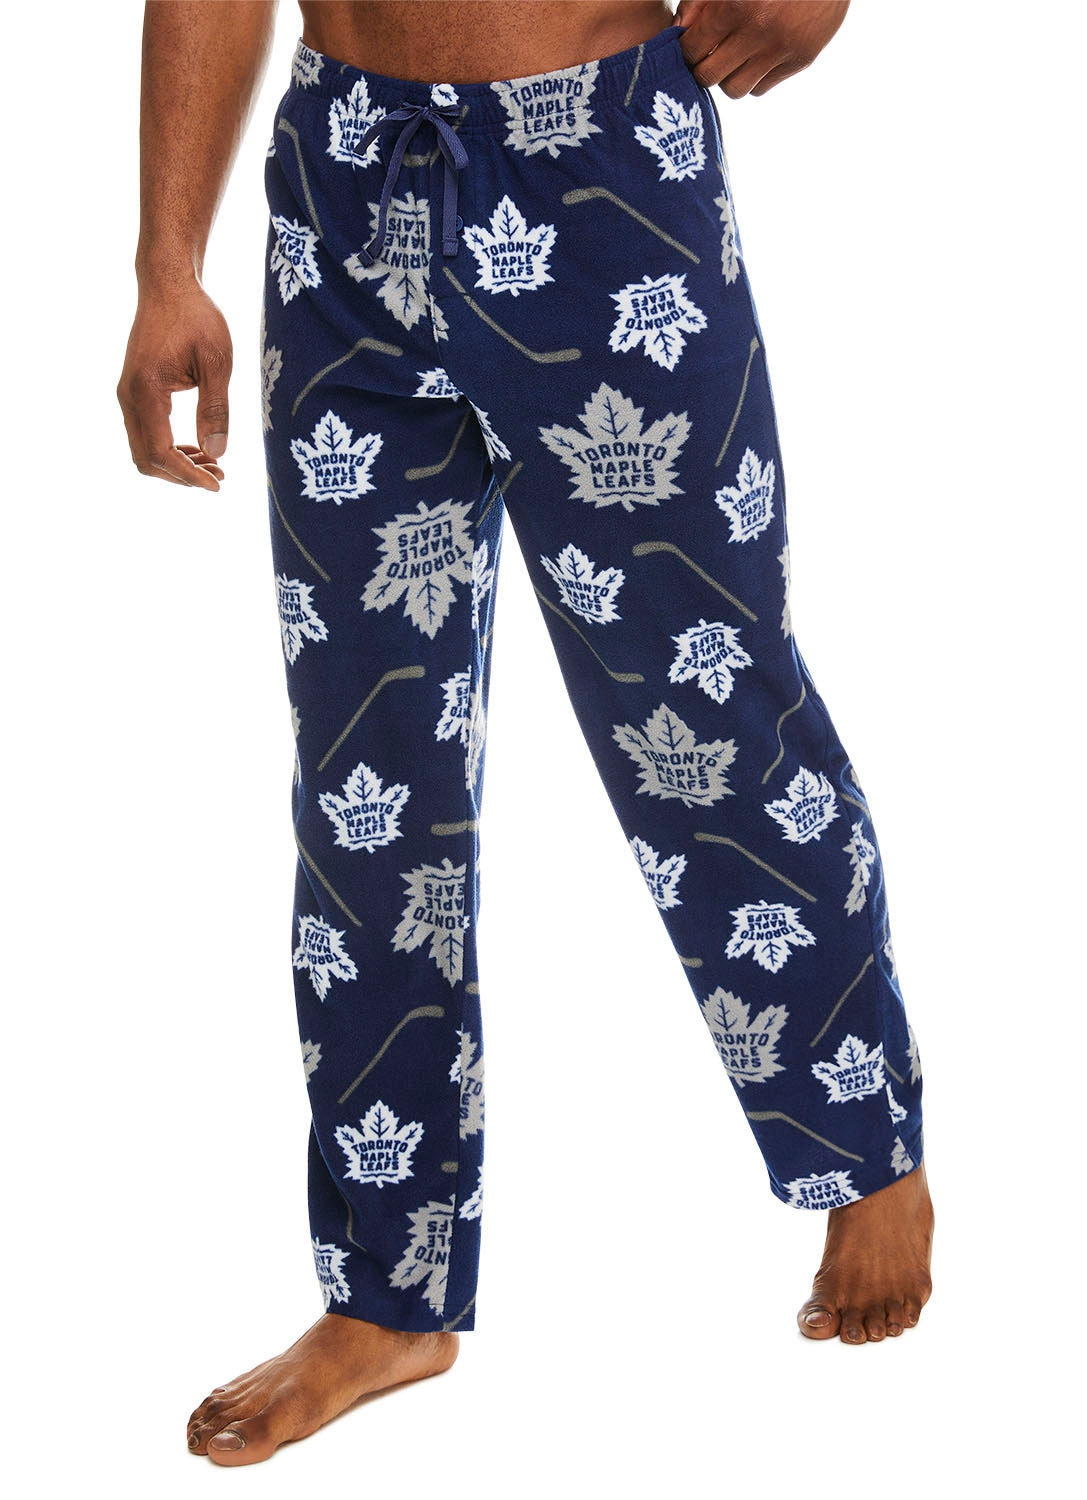 NHL Pajamas, NHL Sleepwear & Lounge Pants